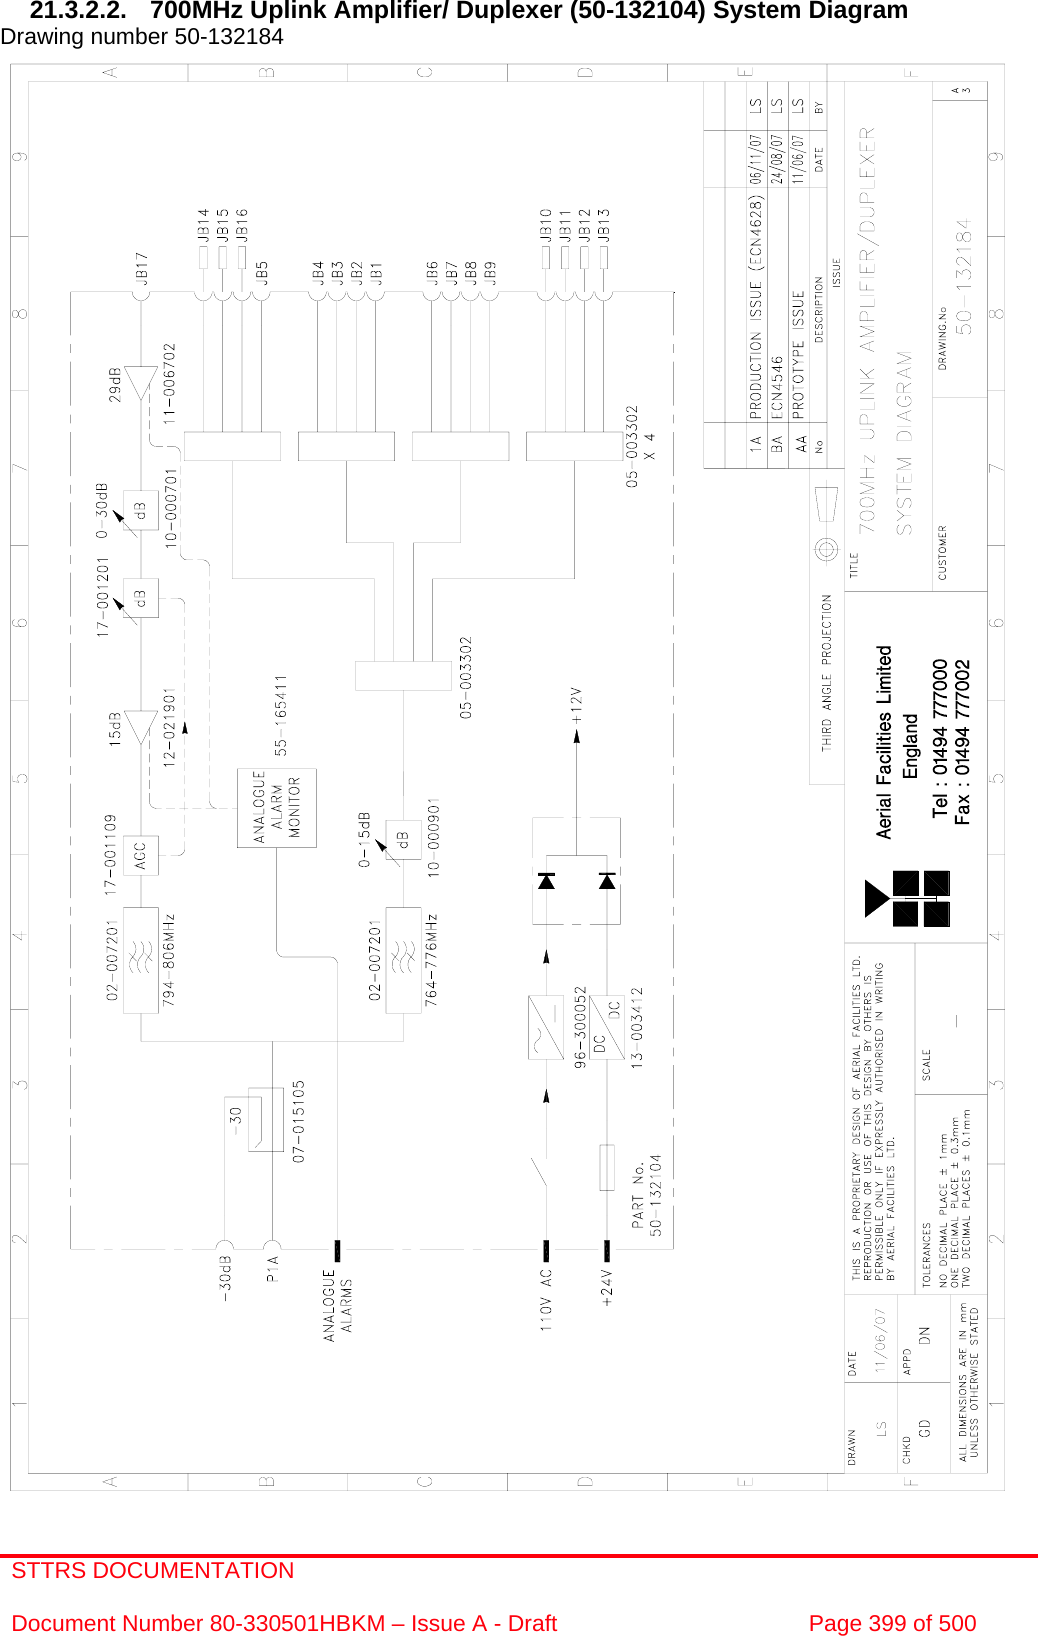 STTRS DOCUMENTATION  Document Number 80-330501HBKM – Issue A - Draft  Page 399 of 500   21.3.2.2.  700MHz Uplink Amplifier/ Duplexer (50-132104) System Diagram  Drawing number 50-132184                                      